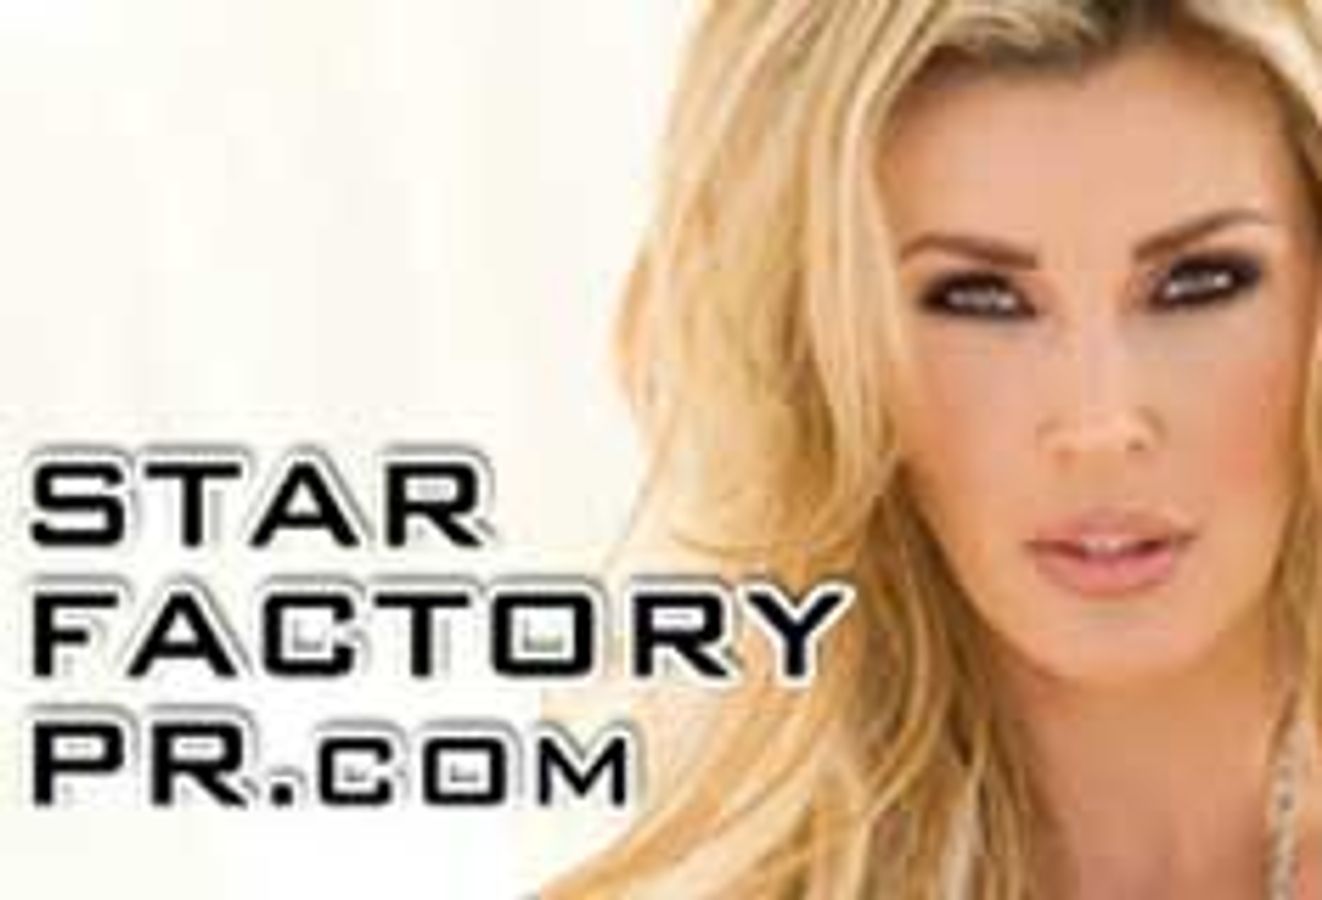 Star Factory PR